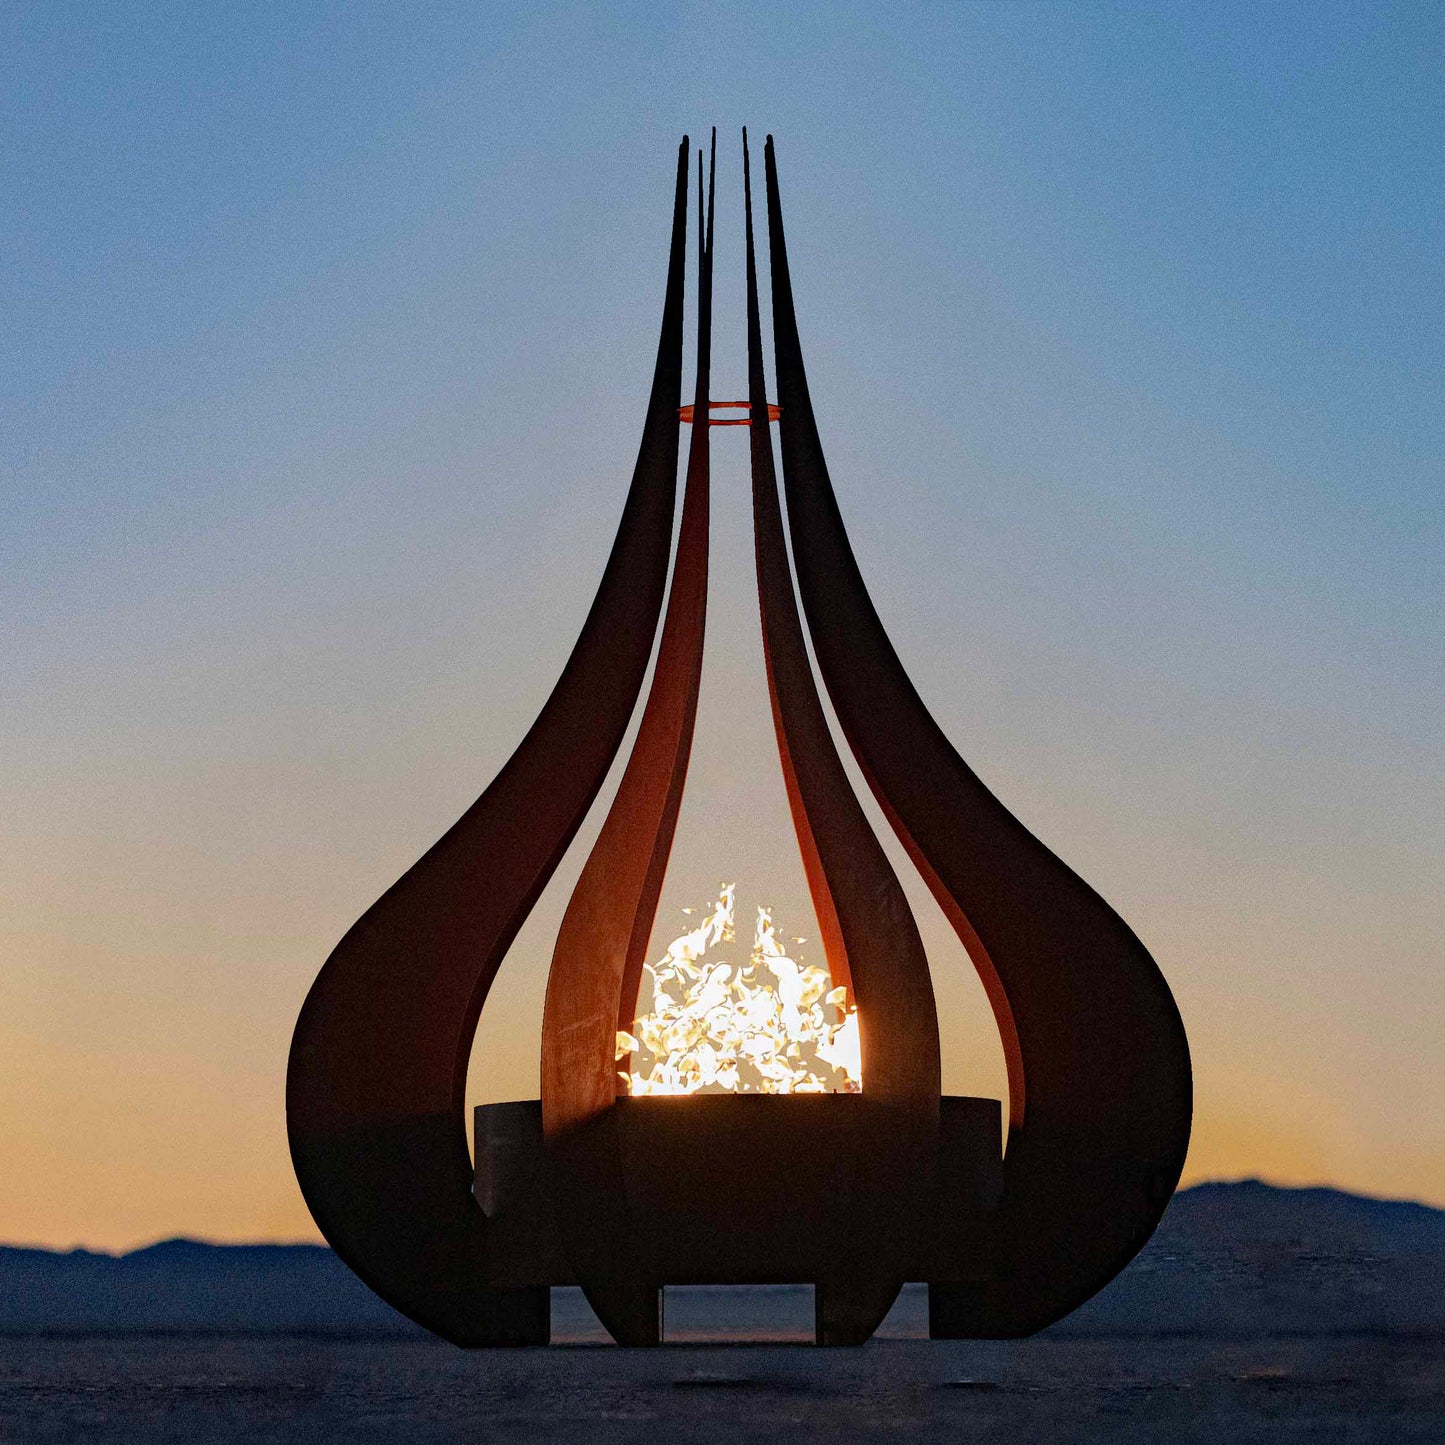 The Comet Fire Sculpture